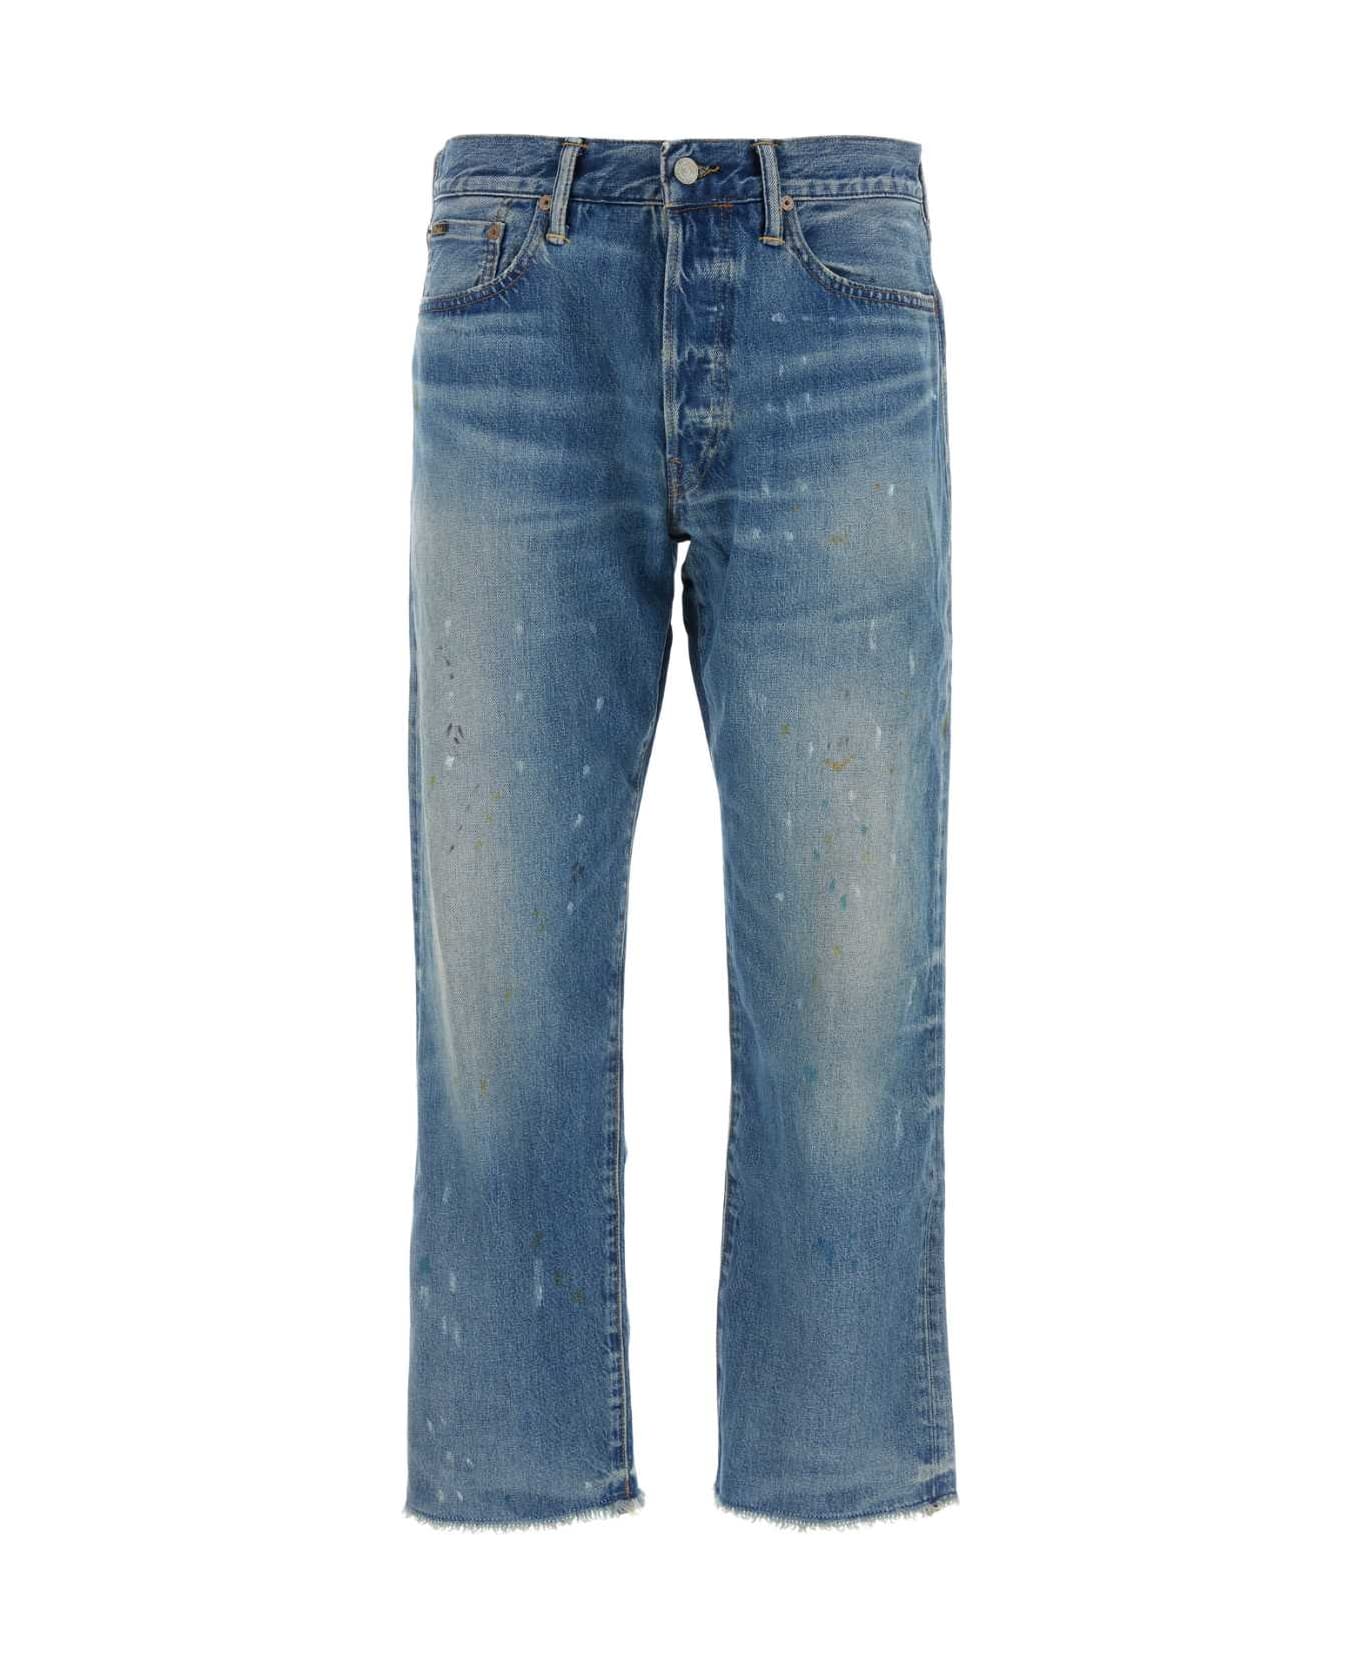 Polo Ralph Lauren Denim Jeans - HABANA